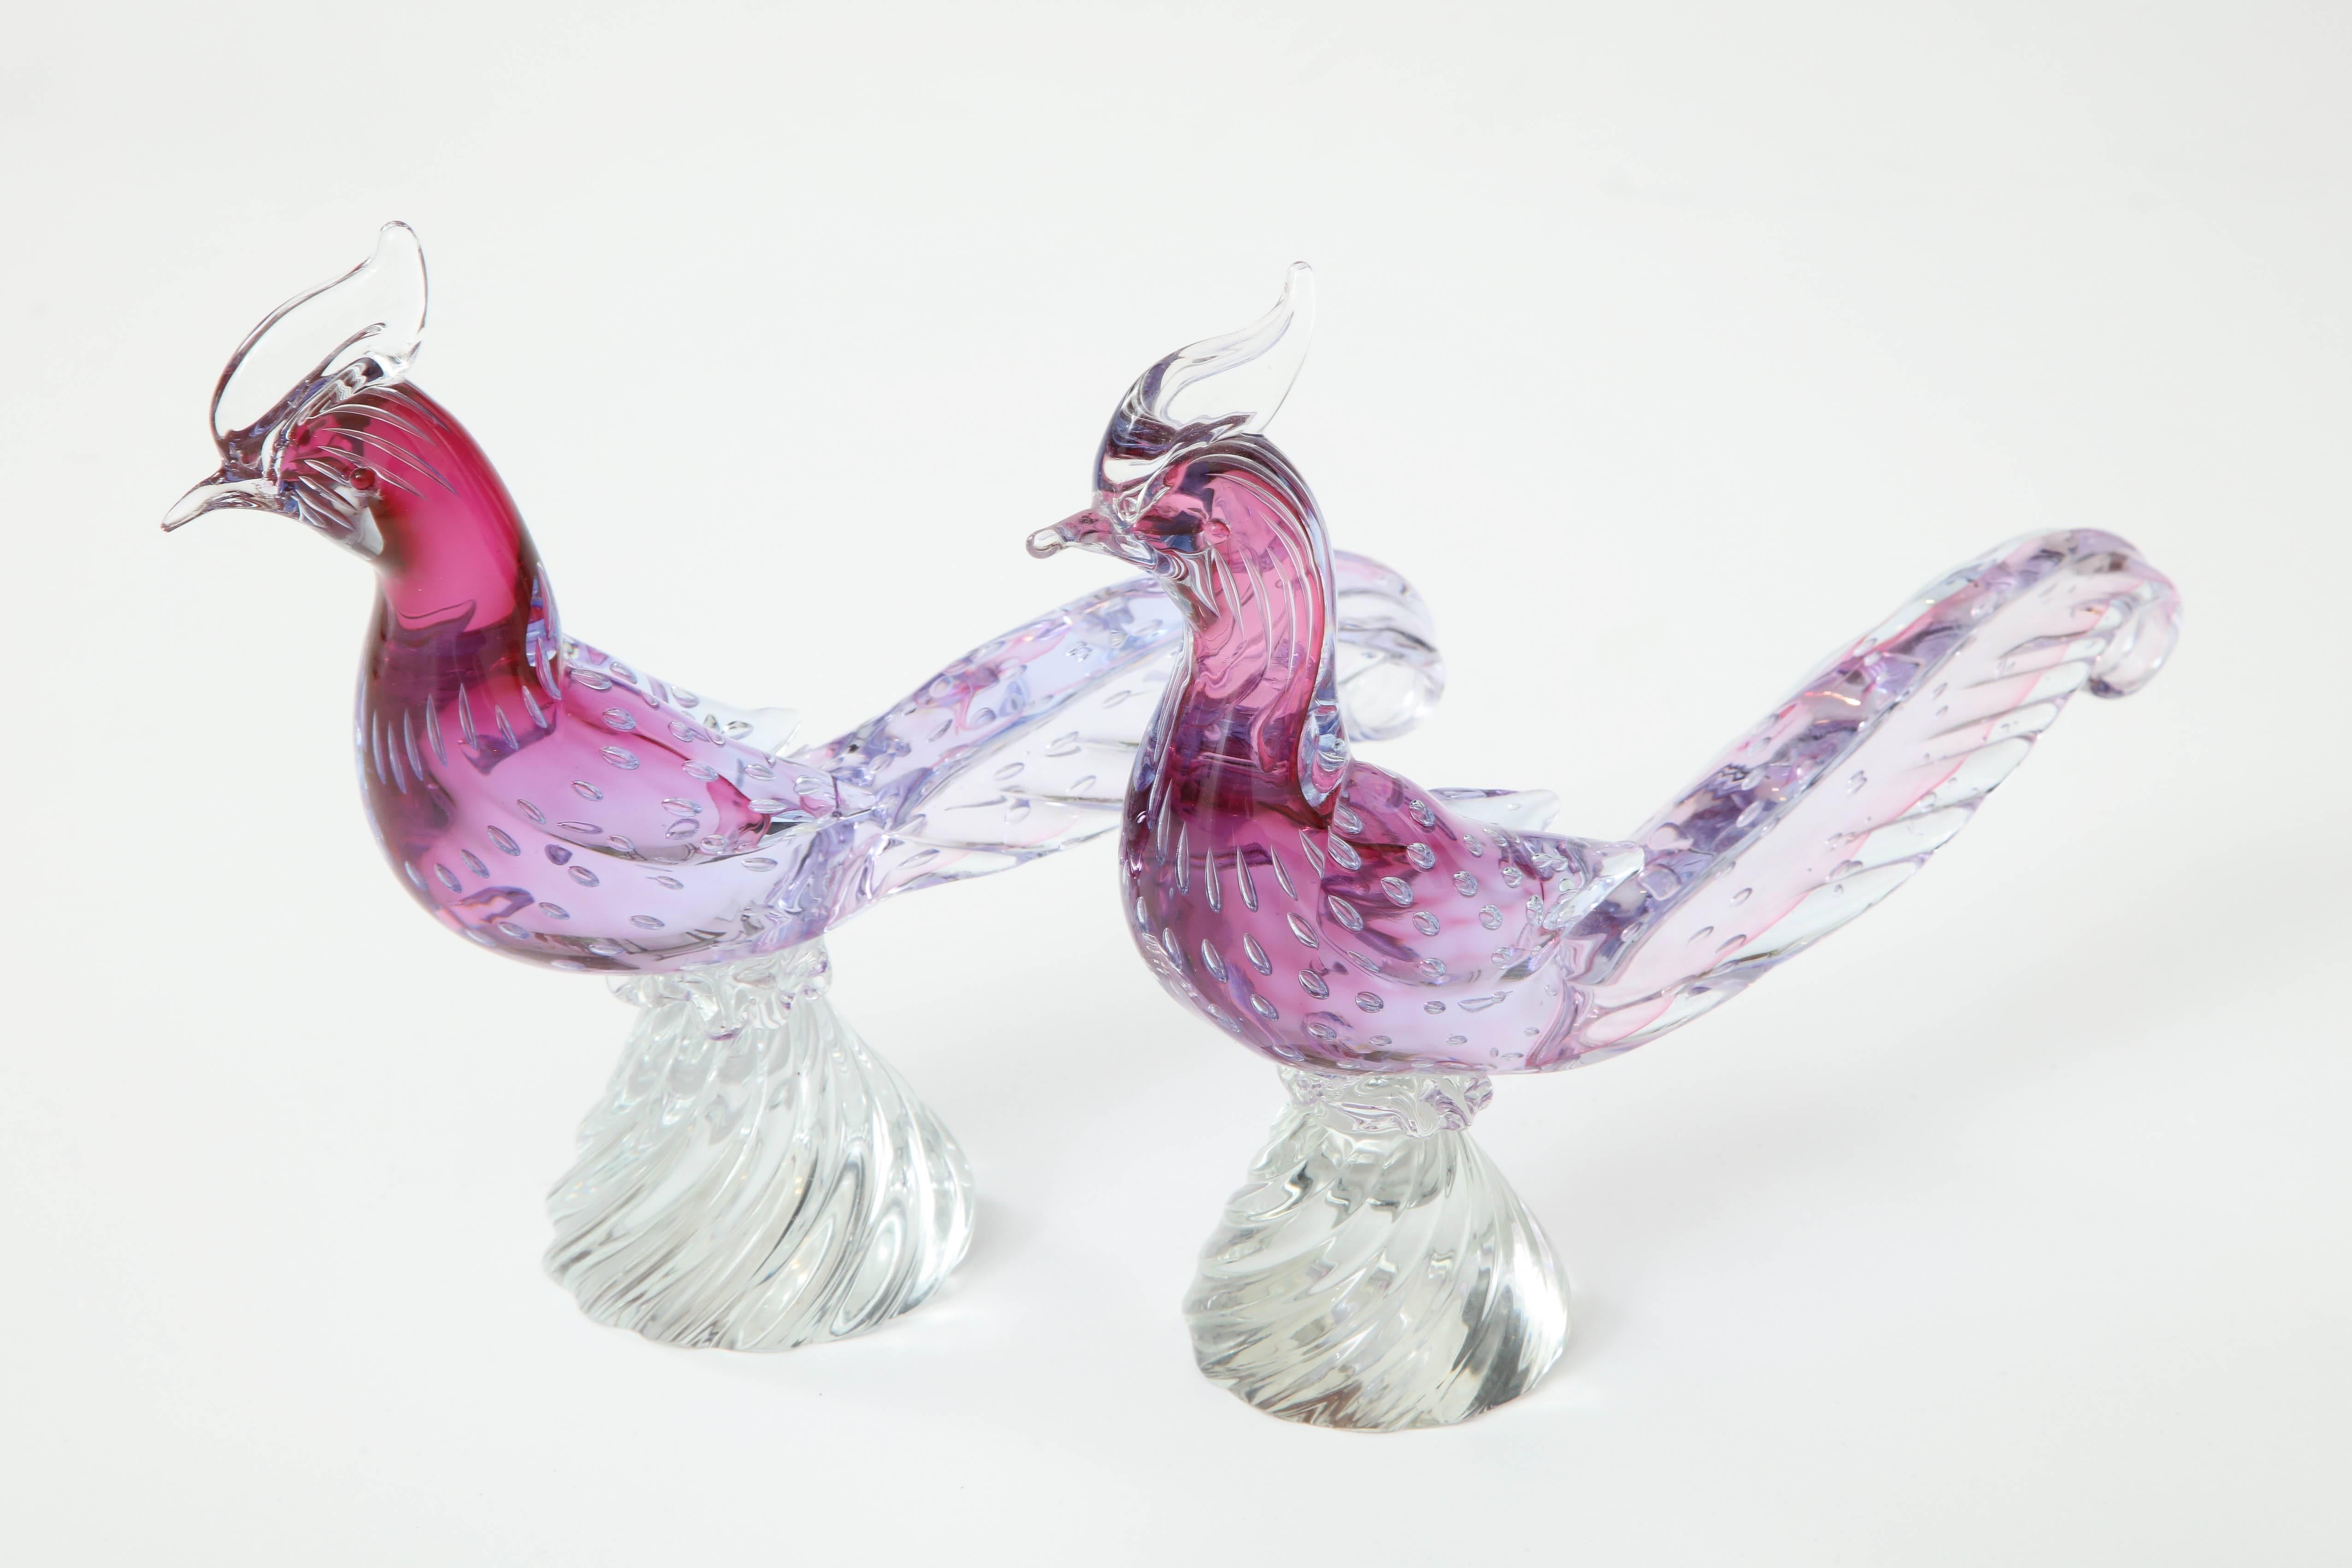 Beautiful pair of Murano glass Pheasants.
Handblown glass in shades of purple, pink and mauve.